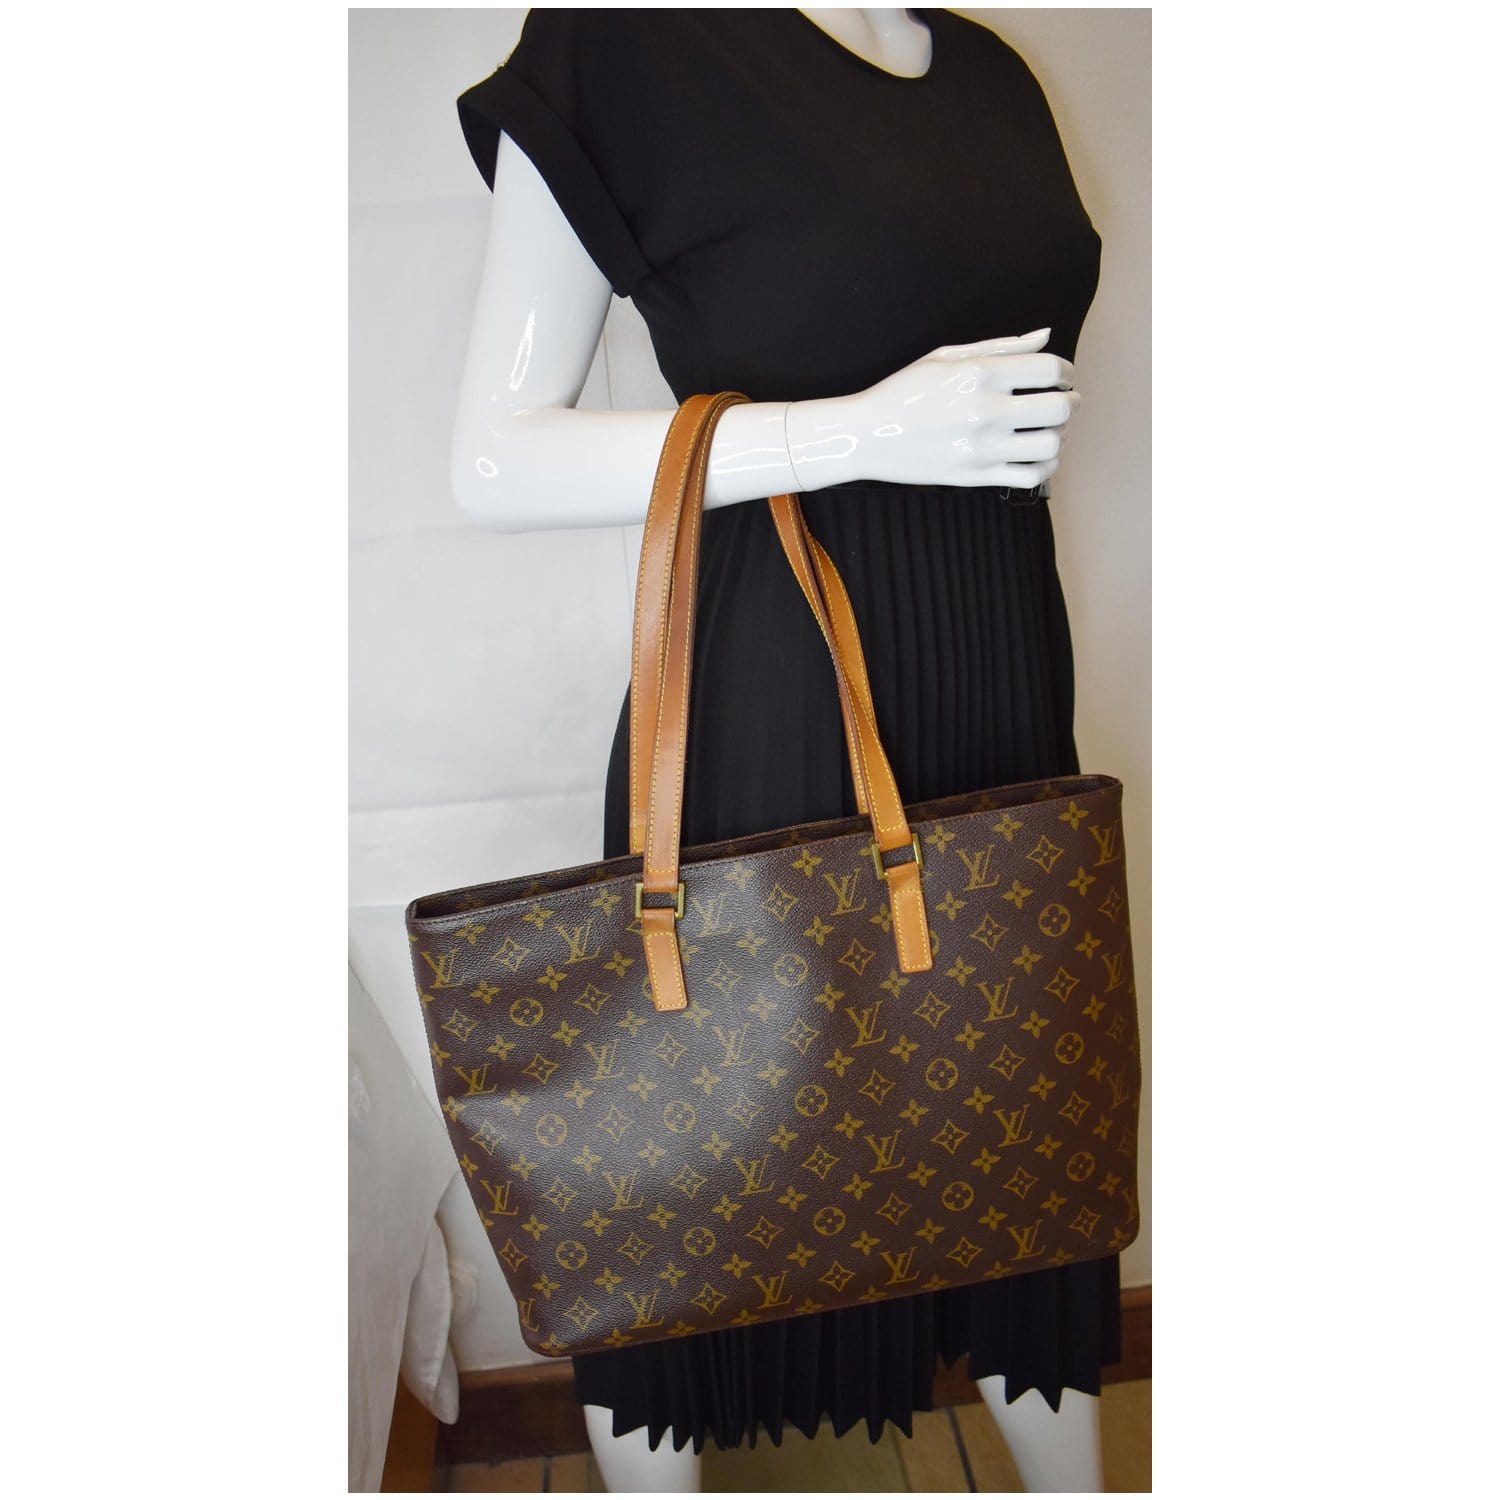 Louis Vuitton Monogram Shopper Bag Brown